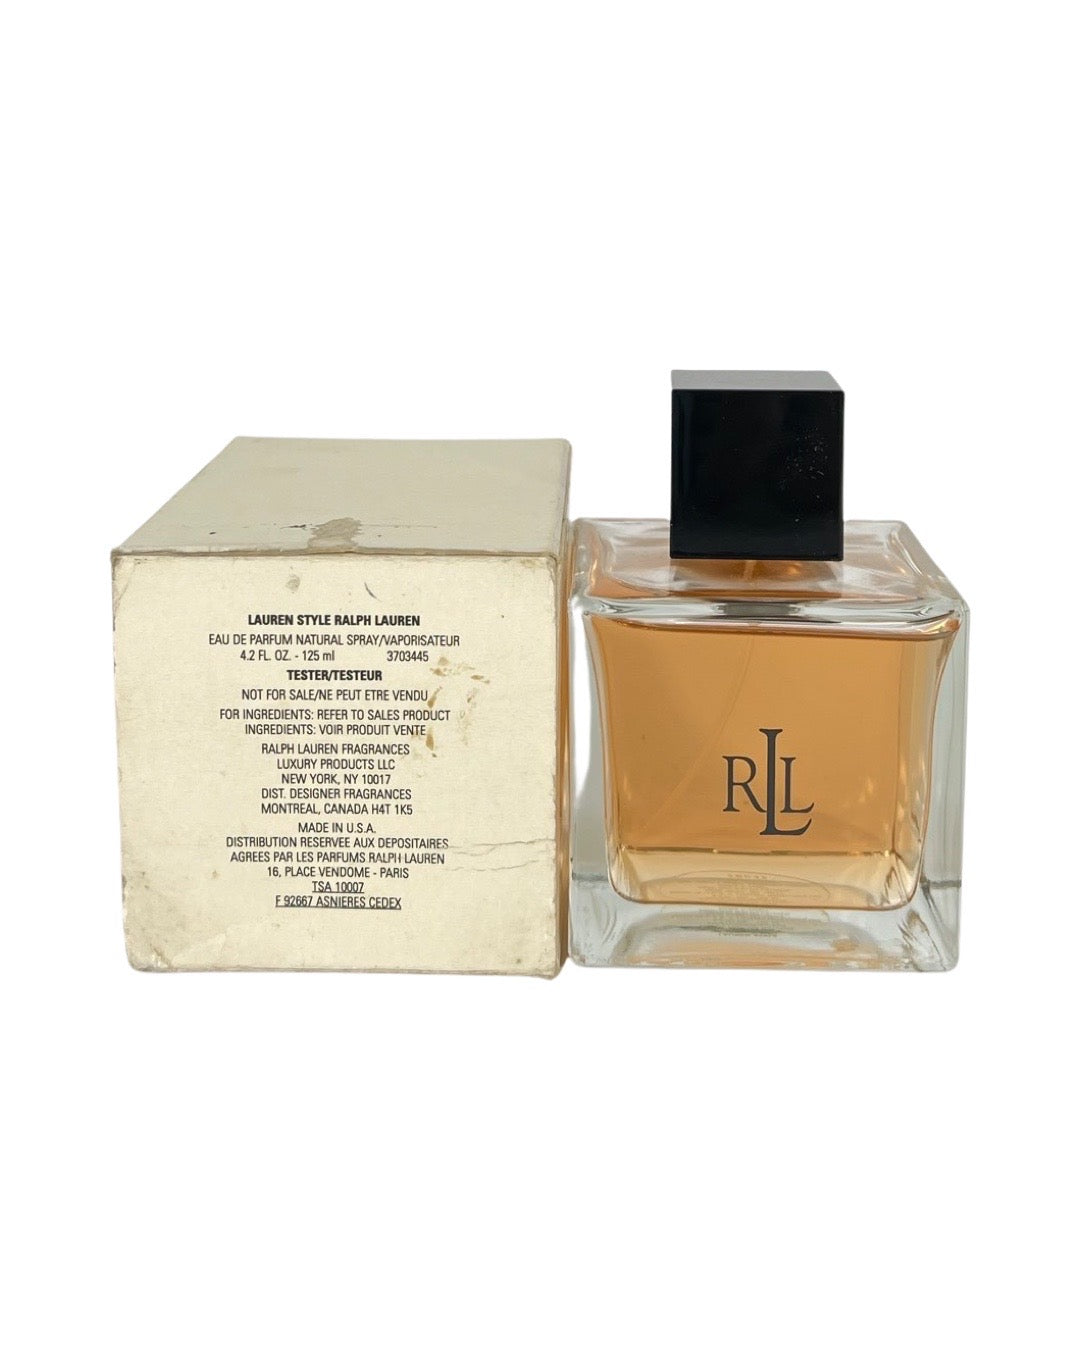 Ralph Lauren | Woman Eau de Parfum